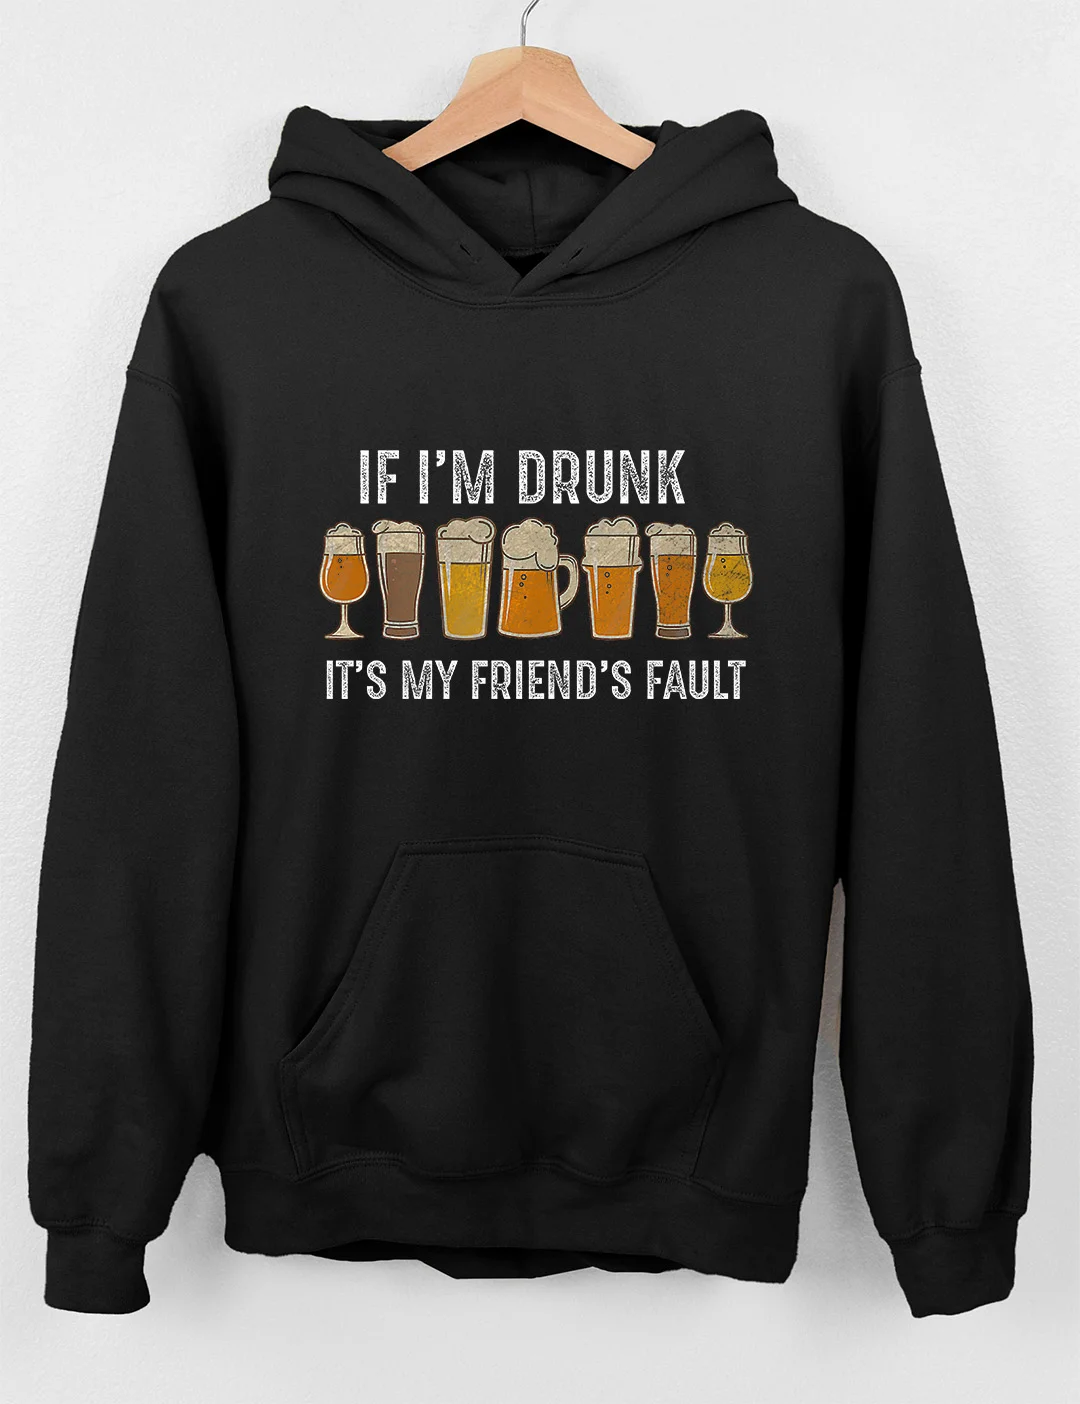 If I'm Drunk It's My Friend's Fault Hoodie